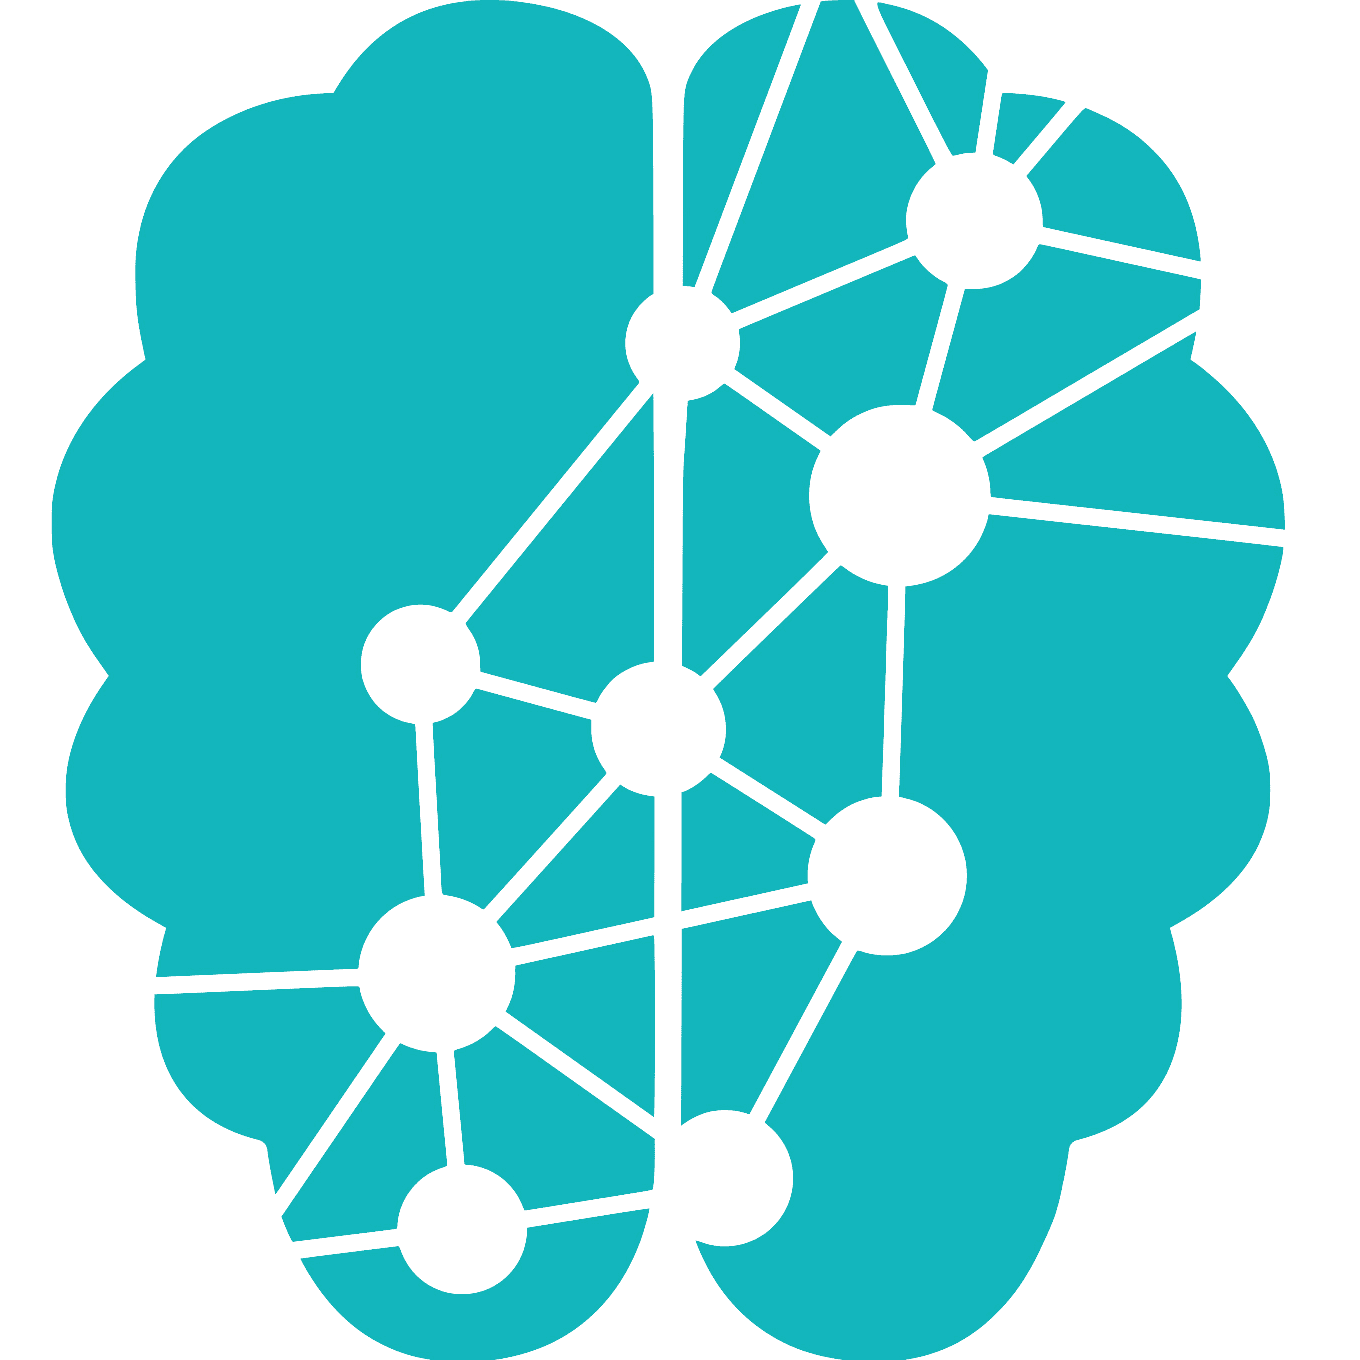 Verge Genomics logo